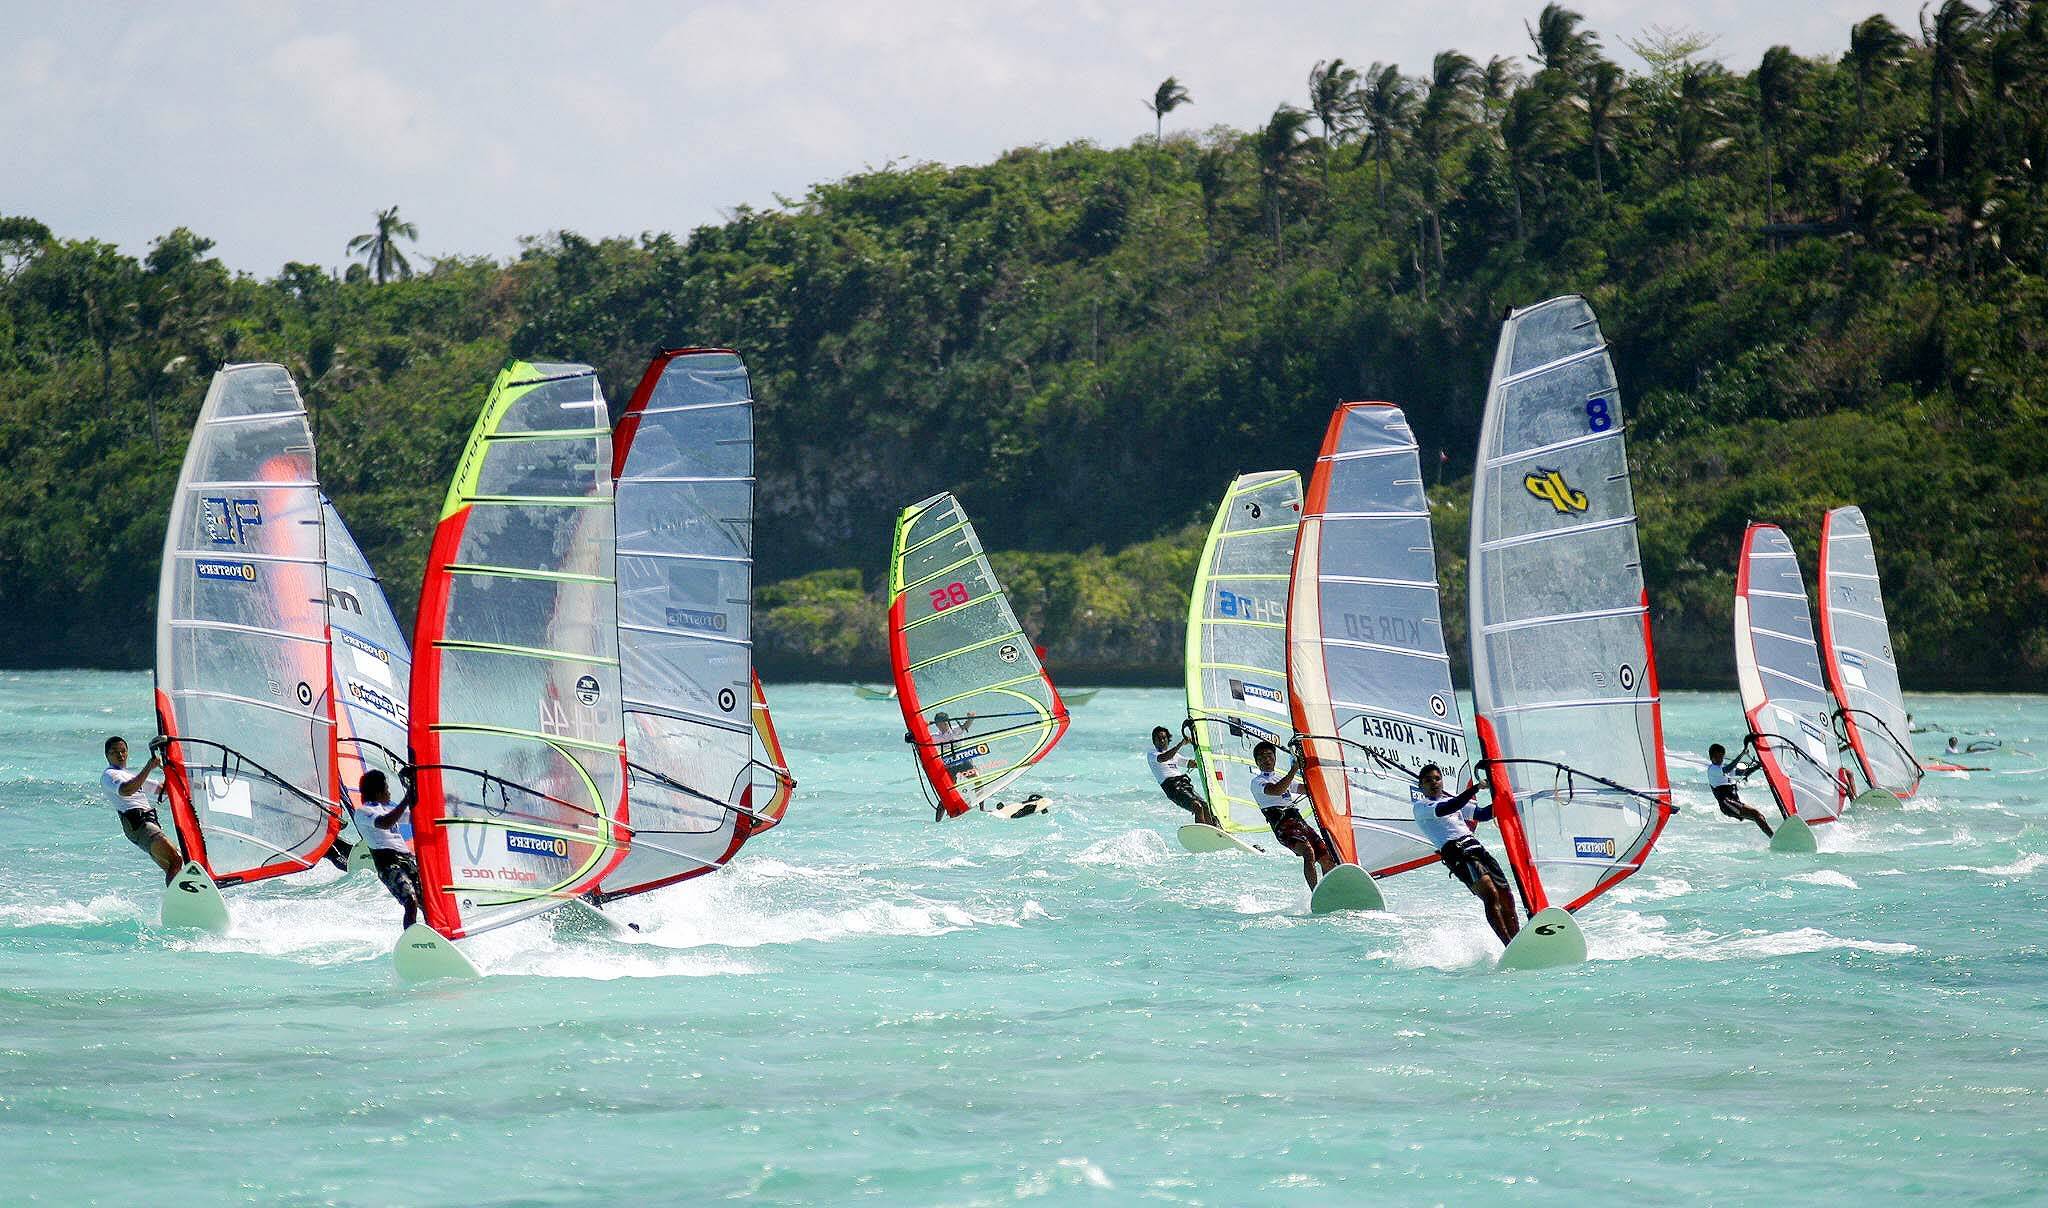 8-boracay-philippines-kitesurfing-holiday-fun-board-cup3-800x472-jpg.jpg